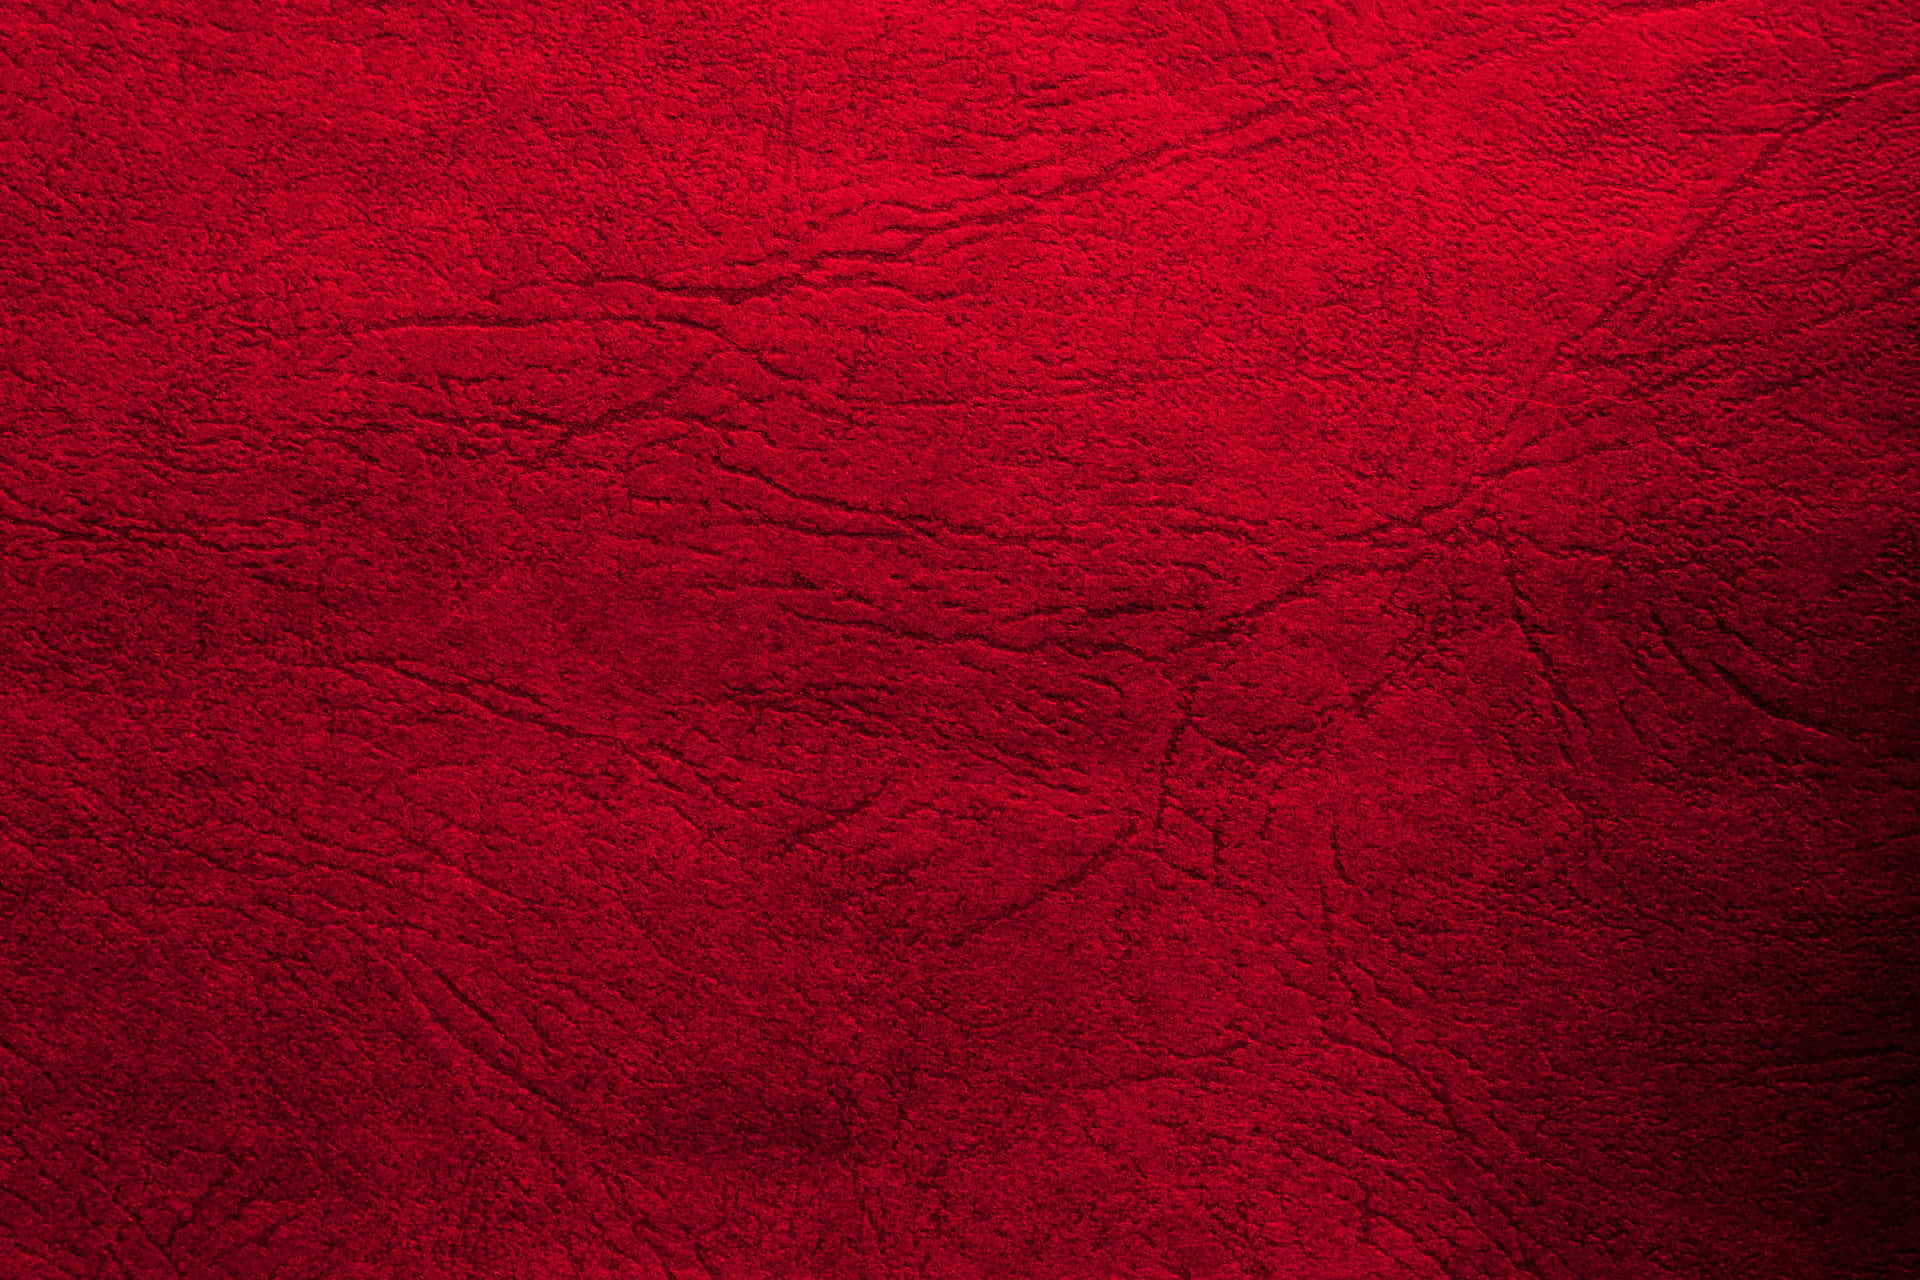 Immaginecon Texture Rossa Vivace In Pelle Rossa